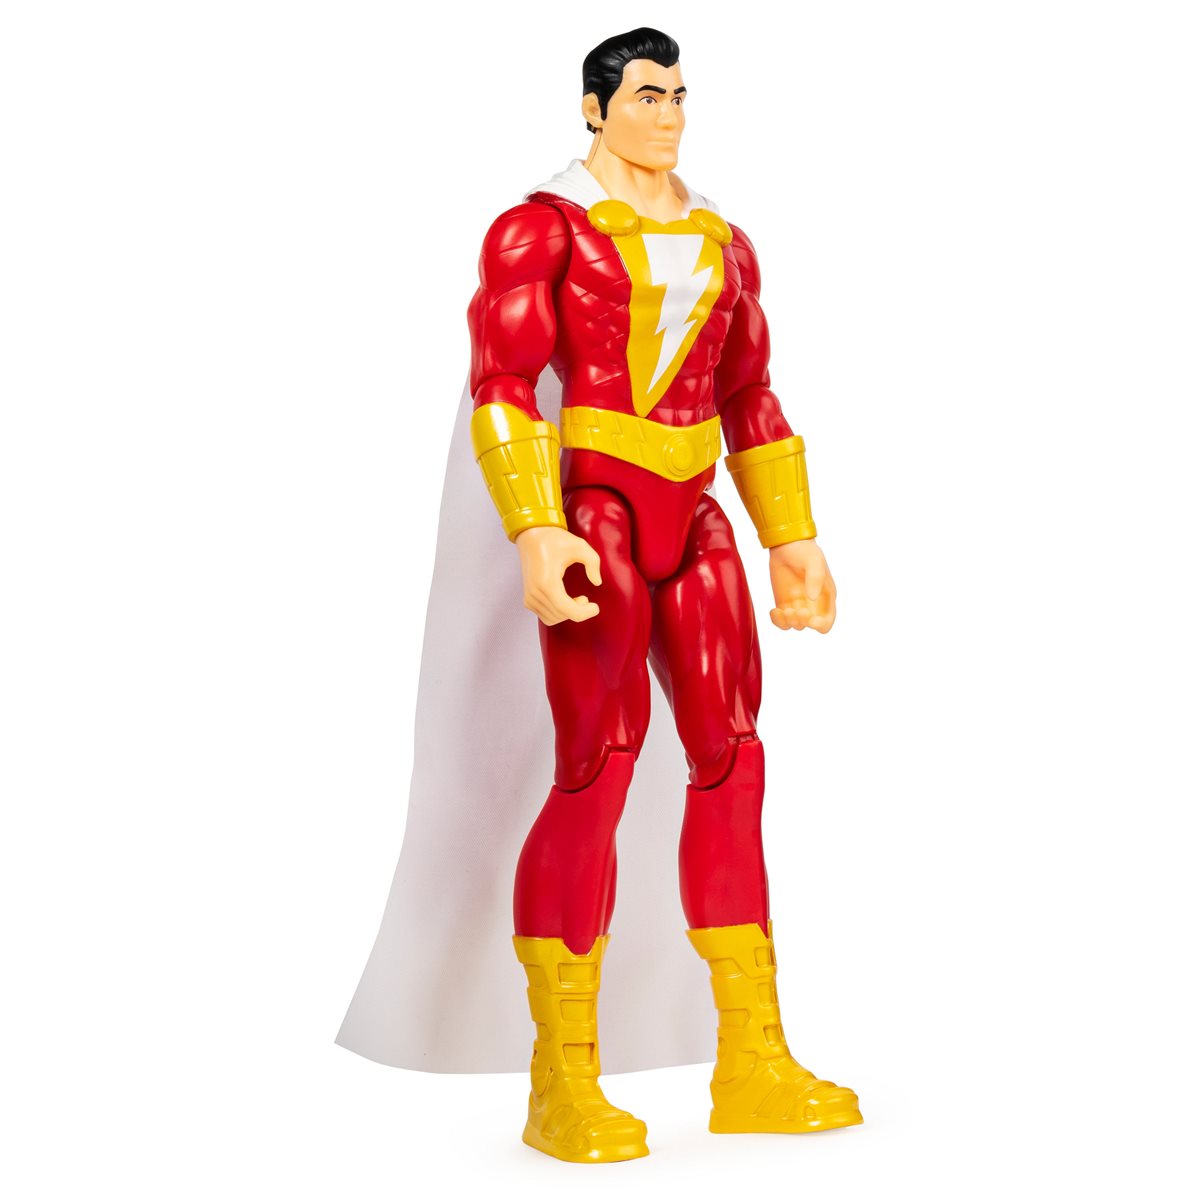 12 inch superhero action figures